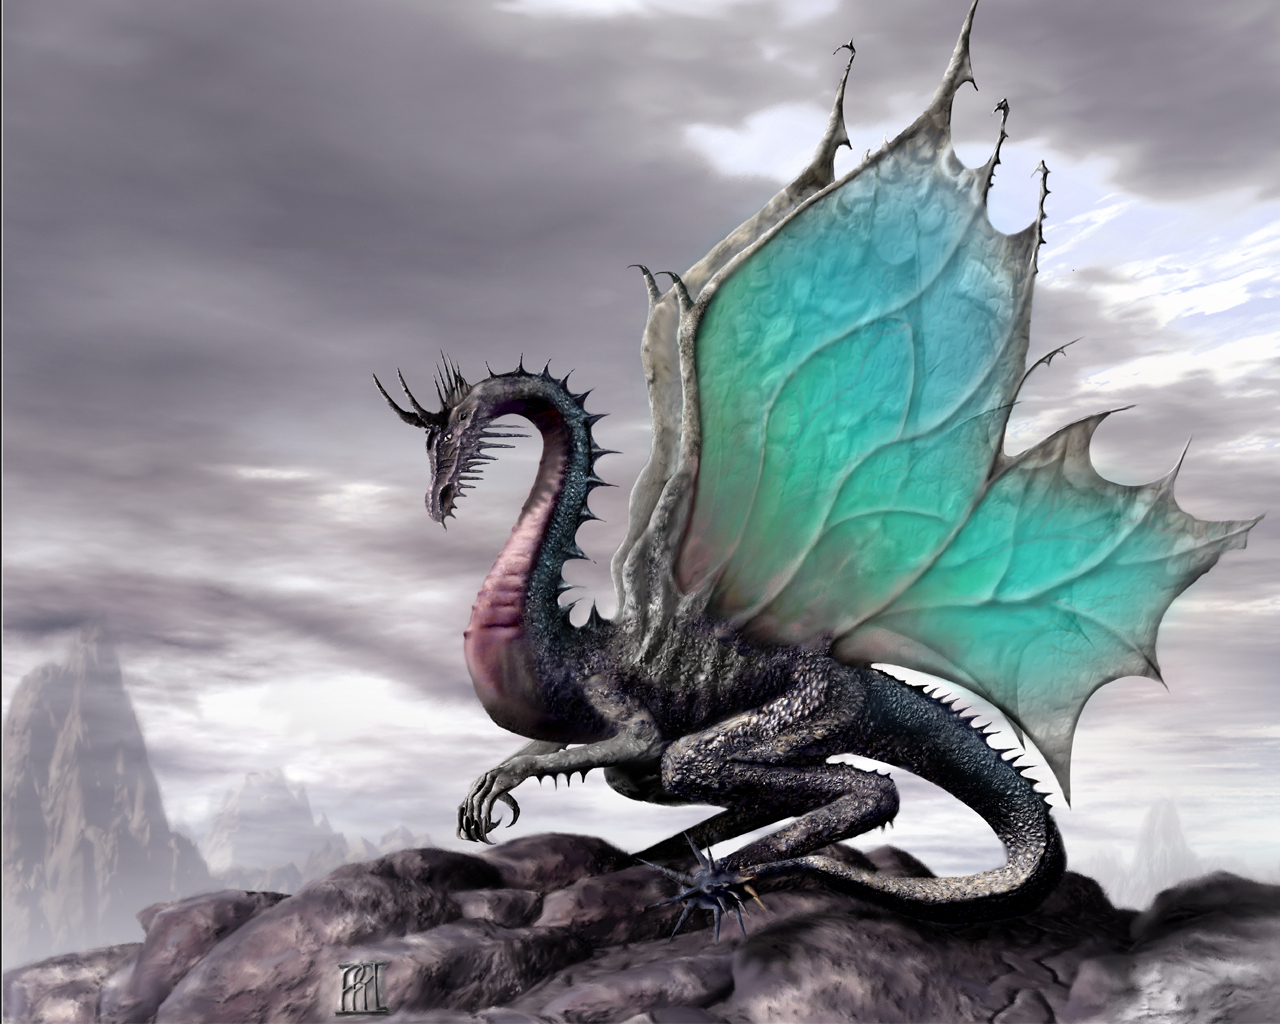 Artist's impression of Sion Mills dragon